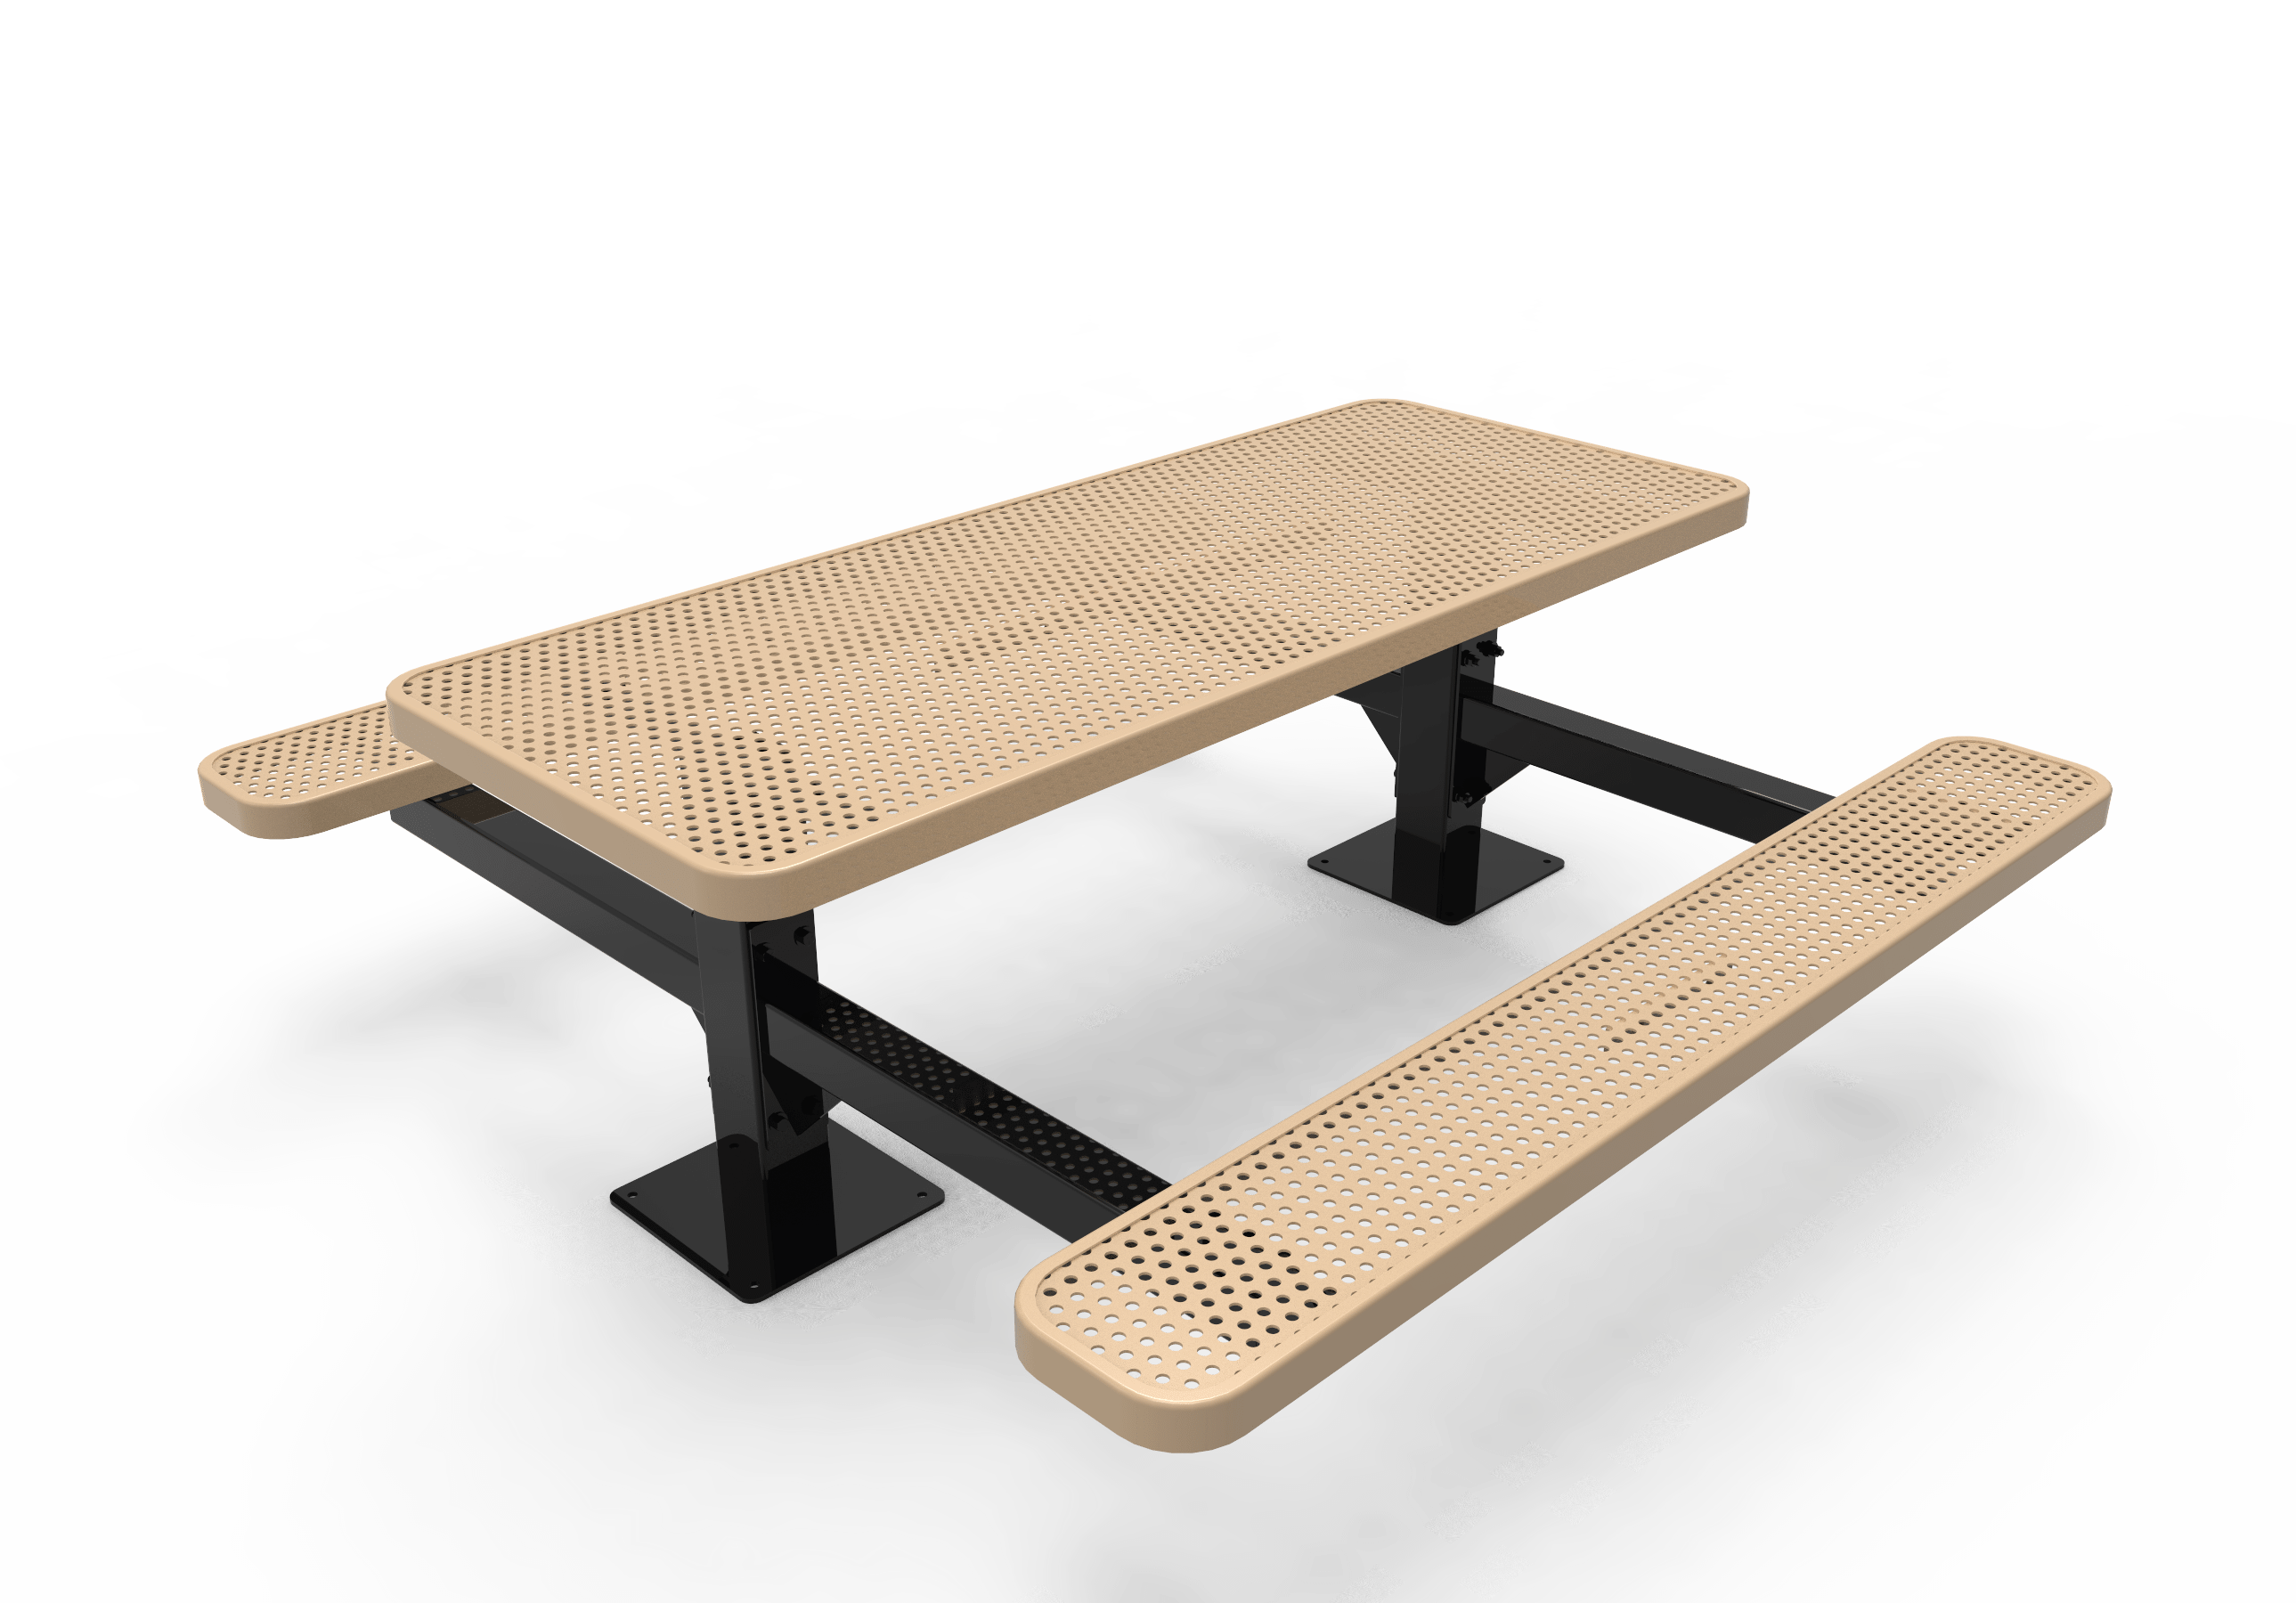 6′ Double Pedestal Picnic Table Surface-Punched
TRT06-D-09-000
Industry Standard Finish
$2259.00
TRT06-B-09-000
Advantage Premium Finish
$2779.00
